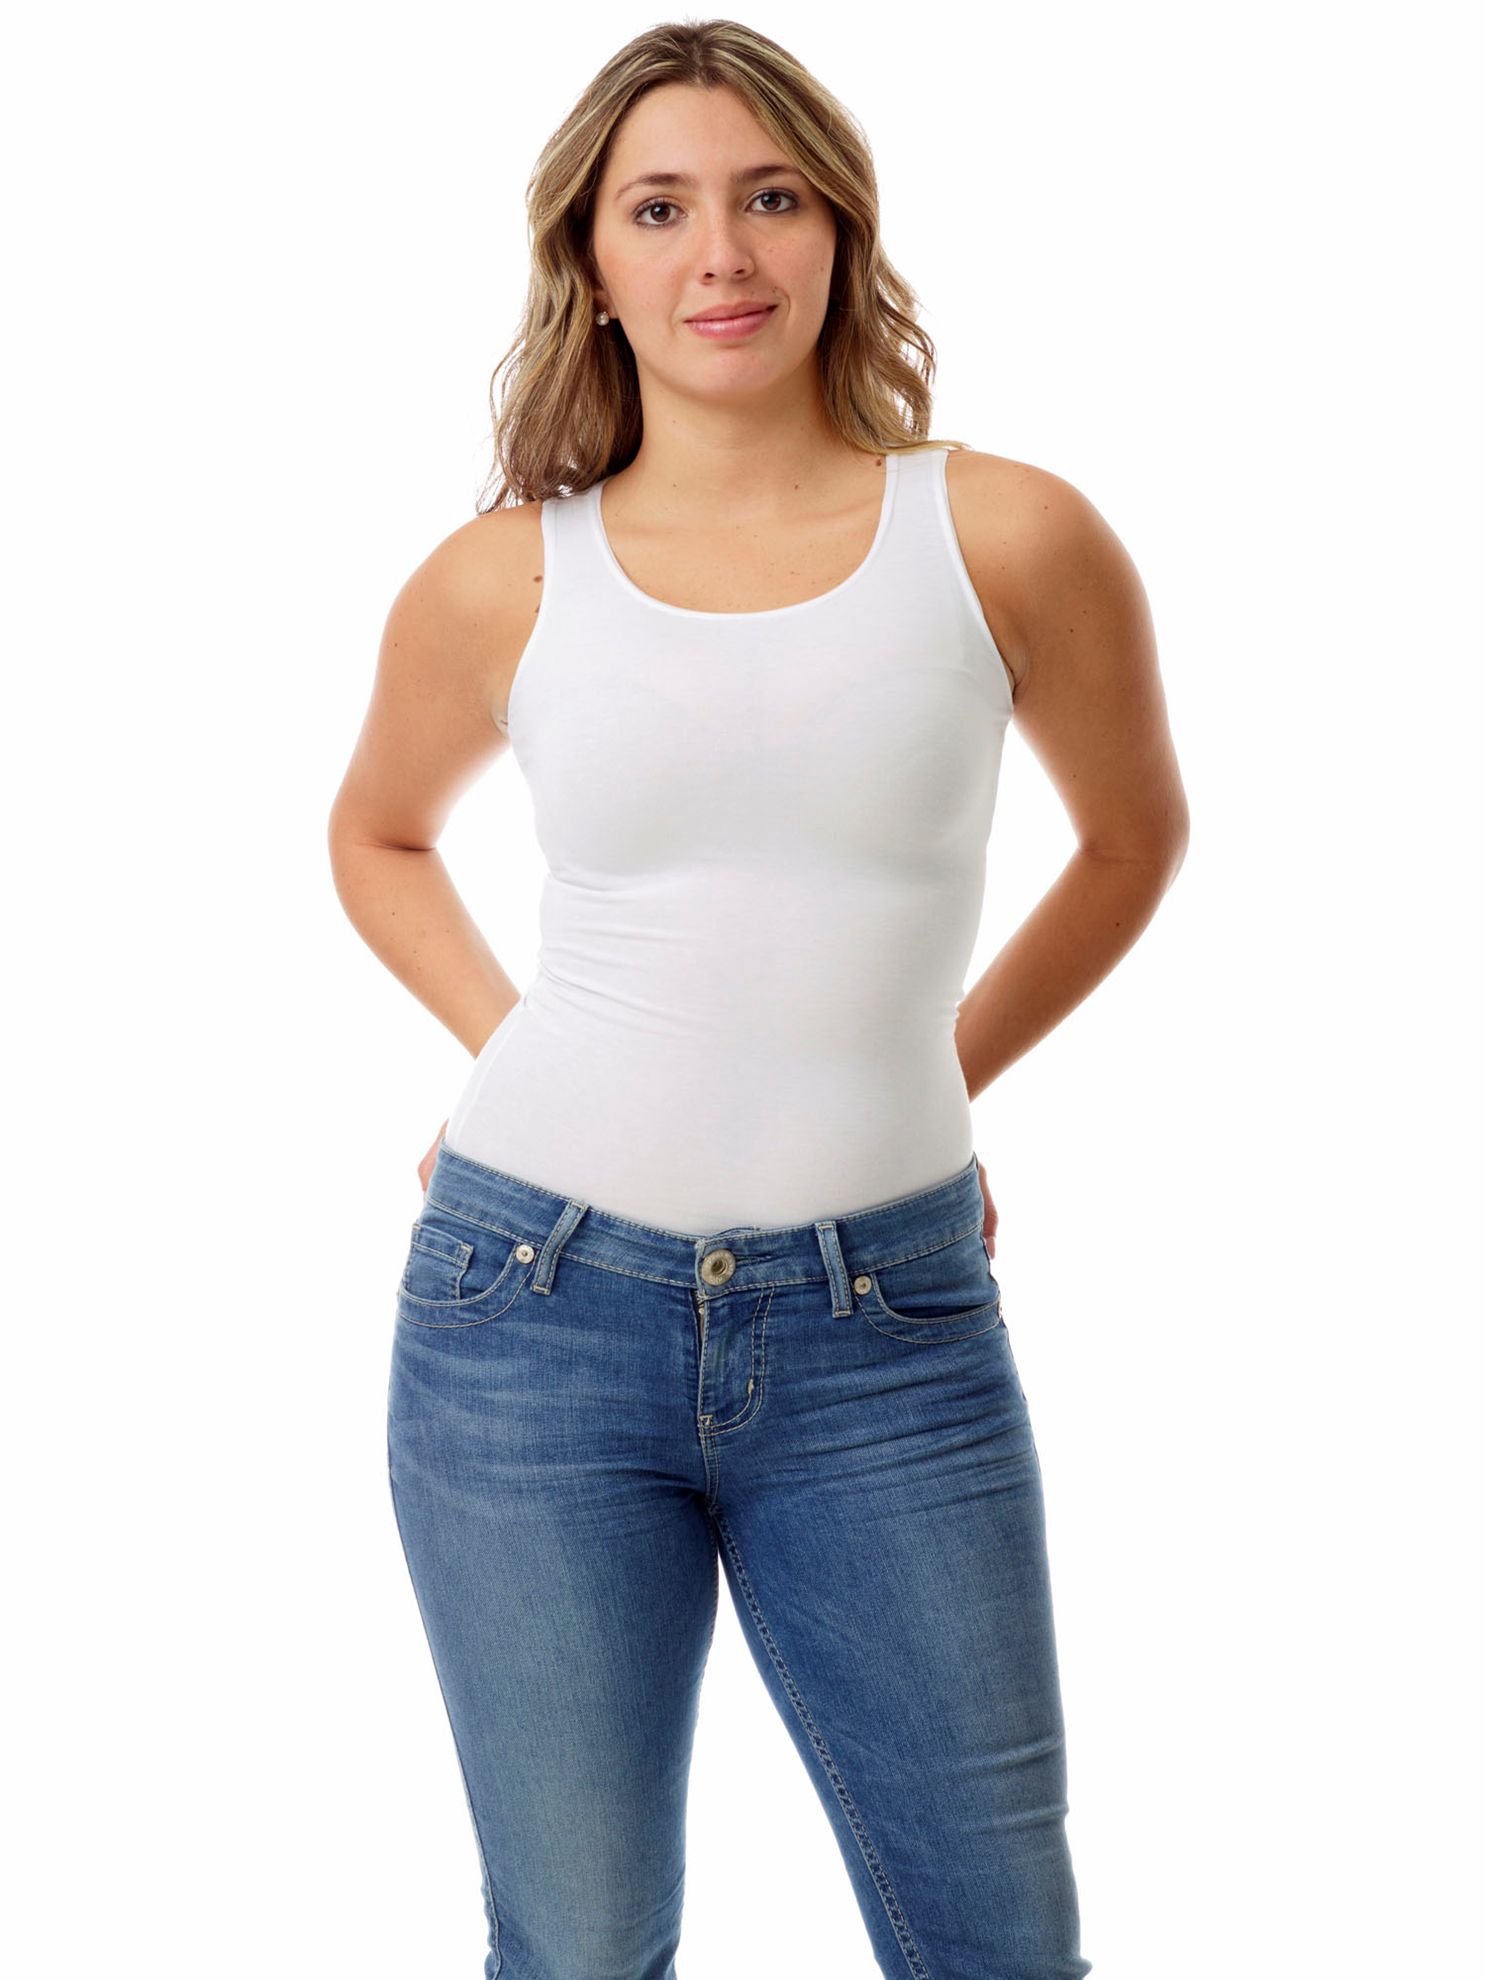 https://www.underworks.com/images/thumbs/0000283_womens-ultra-light-cotton-spandex-compression-tank.jpeg